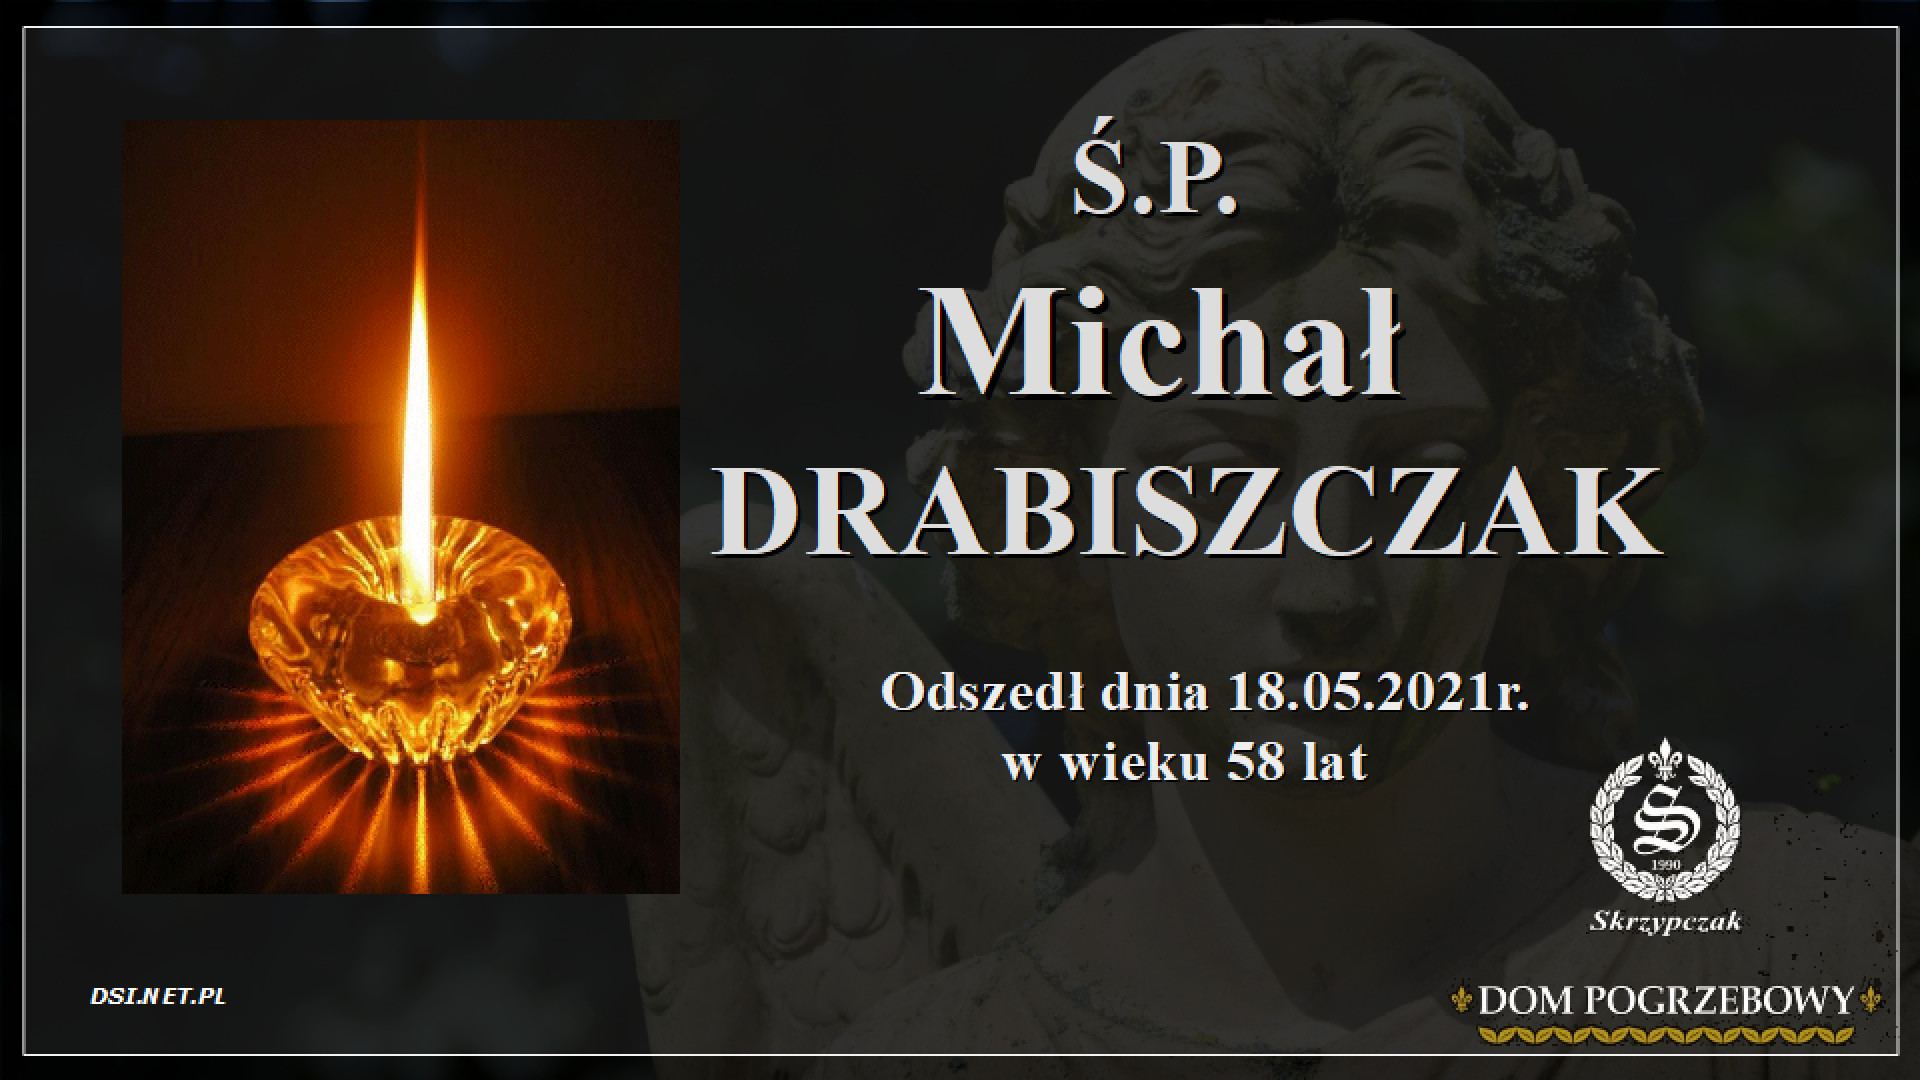 Ś.P. Michał Drabiszczak